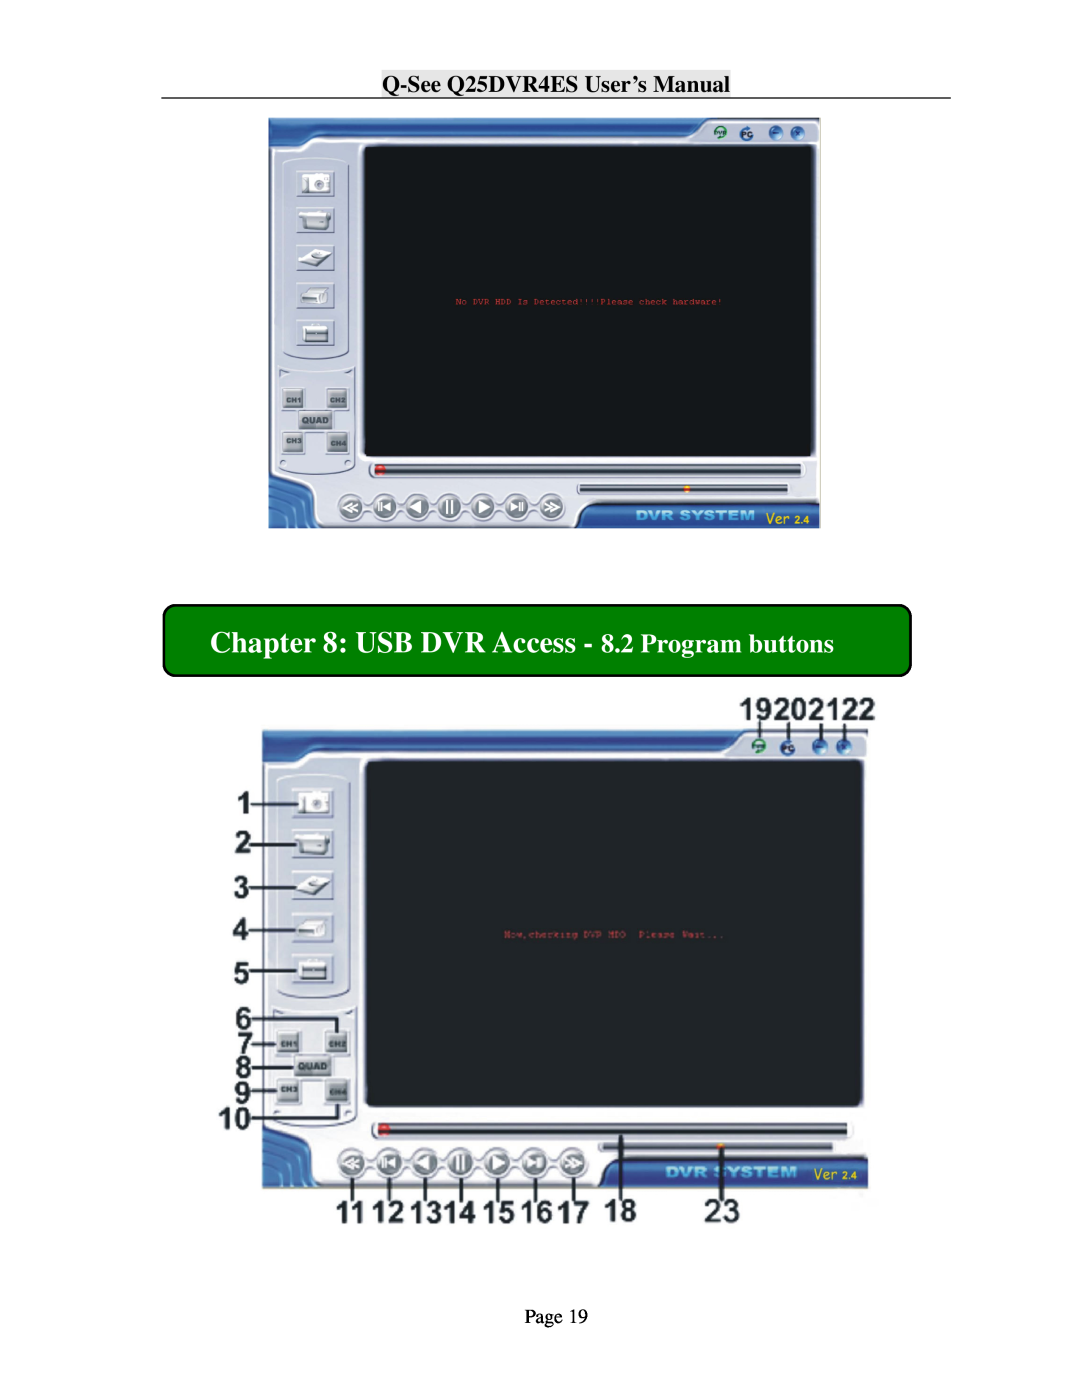 Q-See user manual USB DVR Access - 8.2 Program buttons, Q-SeeQ25DVR4ES User’s Manual 